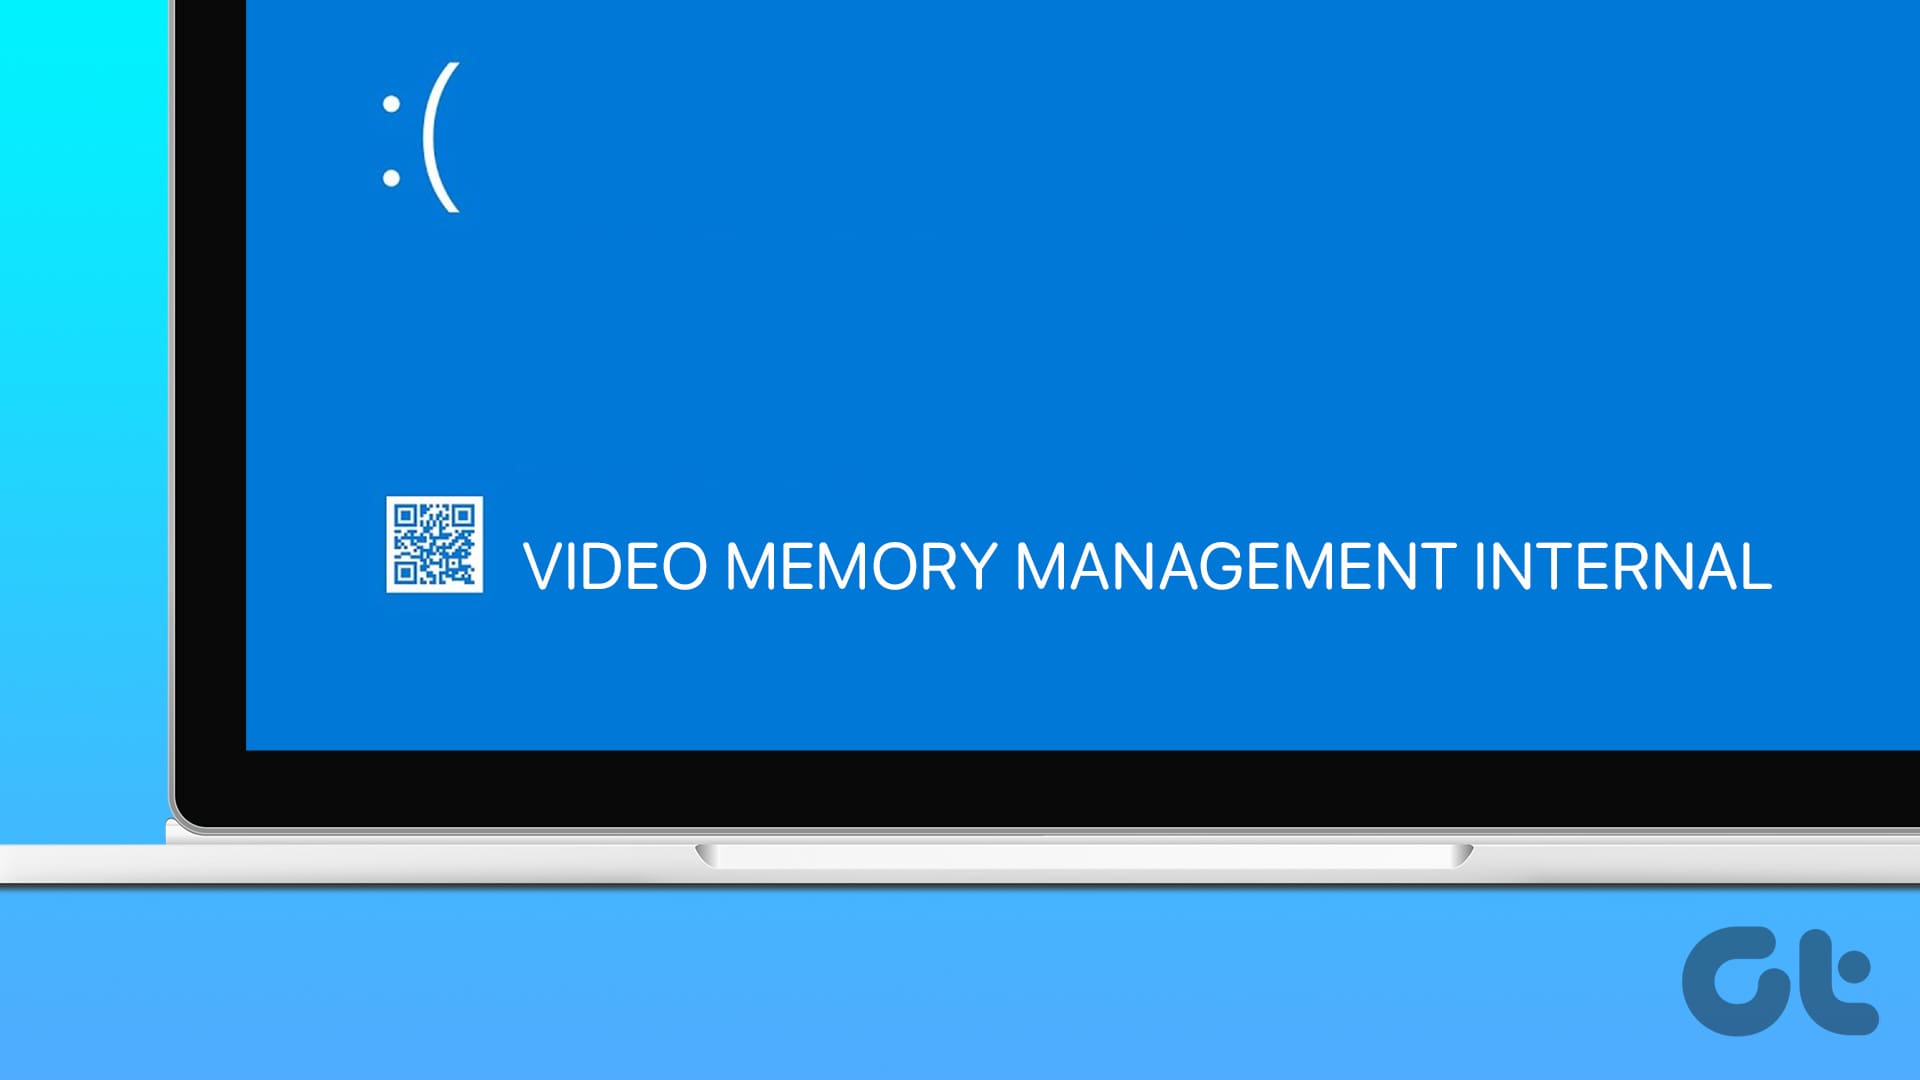 How to Fix Video Memory Management Internal Error on Windows